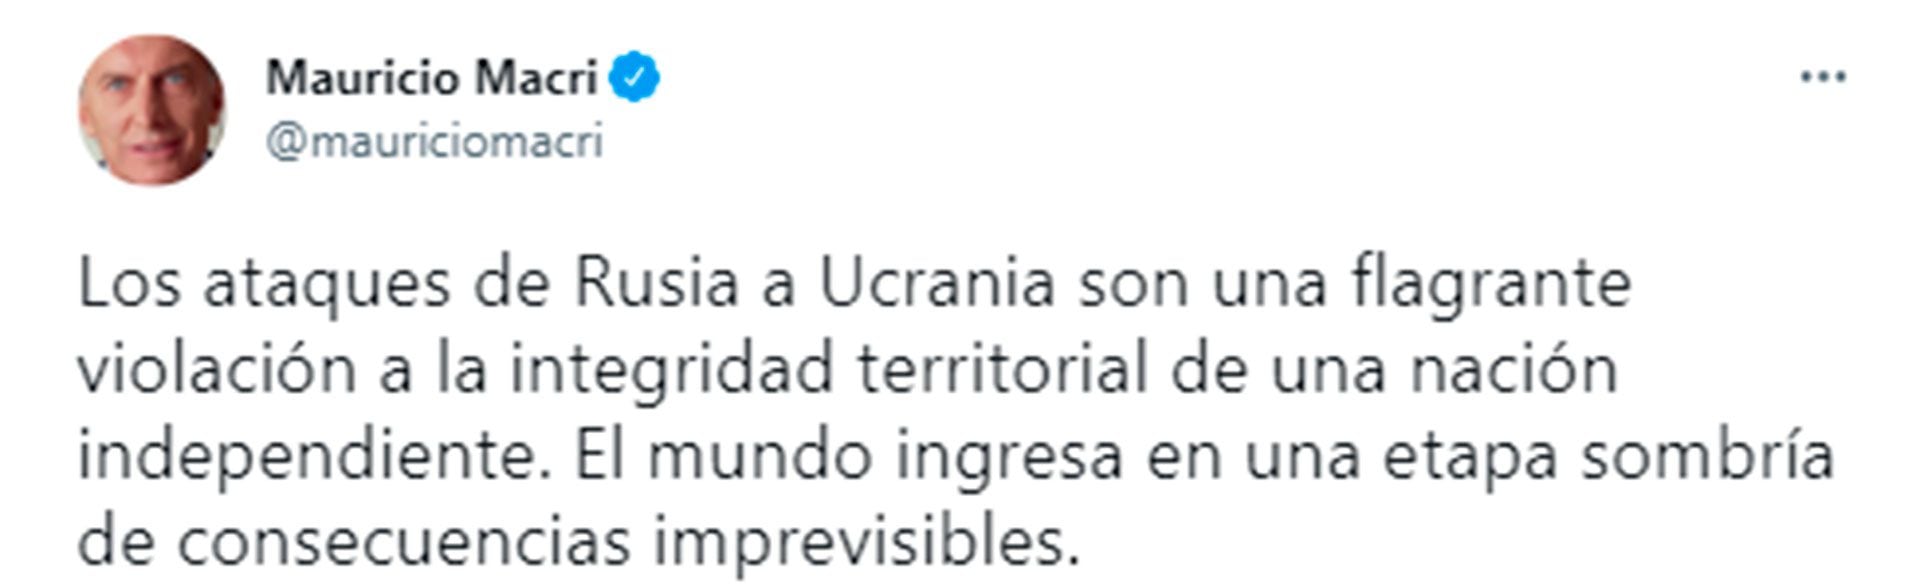 Mauricio Macri condenó los ataques de Rusia contra Ucrania. 